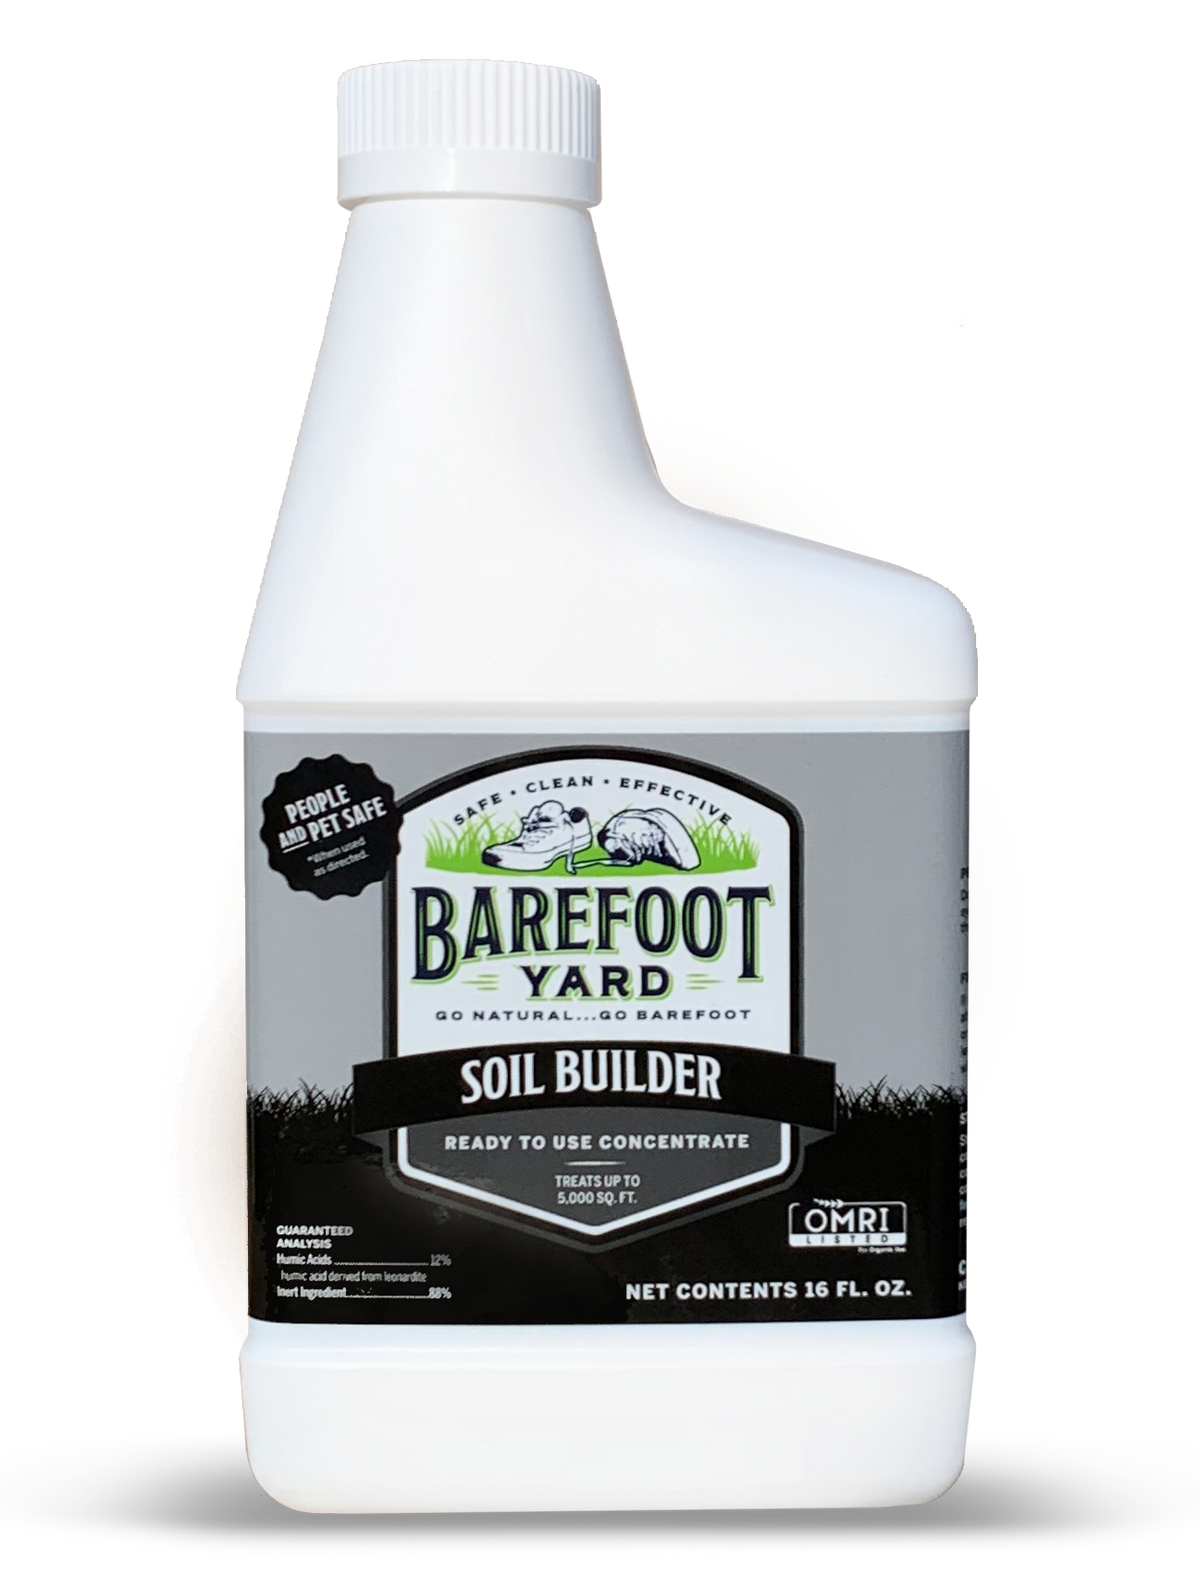 Barefoot Yard Soil Builder, Humic Acid Soil Amendment, OMRI Organic / All Natural, Ready to Use Soil Nutrients, 16 fl oz.